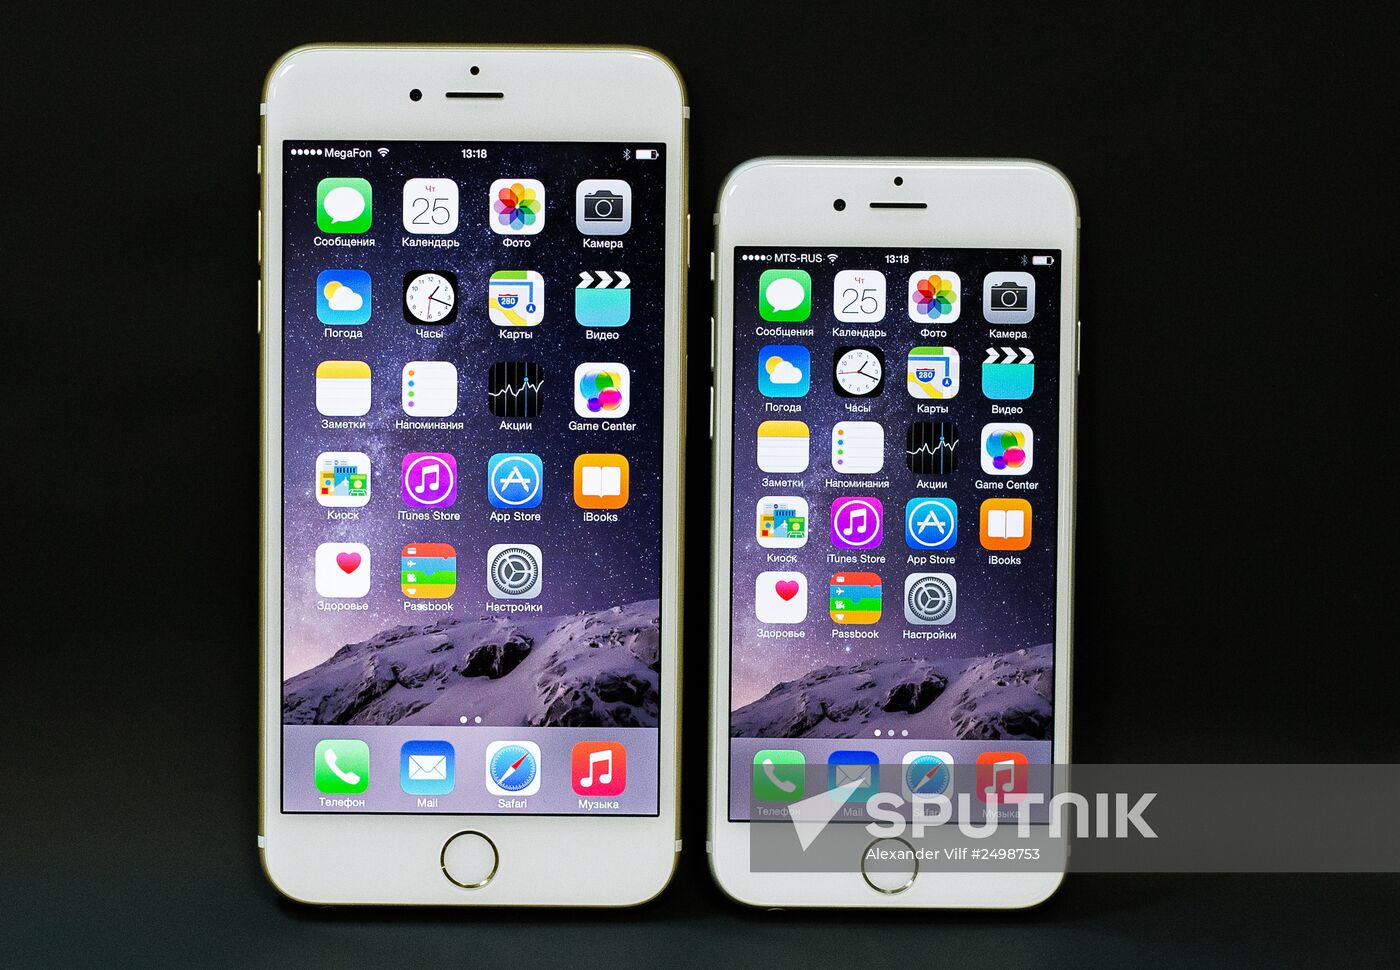 New iPhone 6 and iPhone 6 Plus smartphones